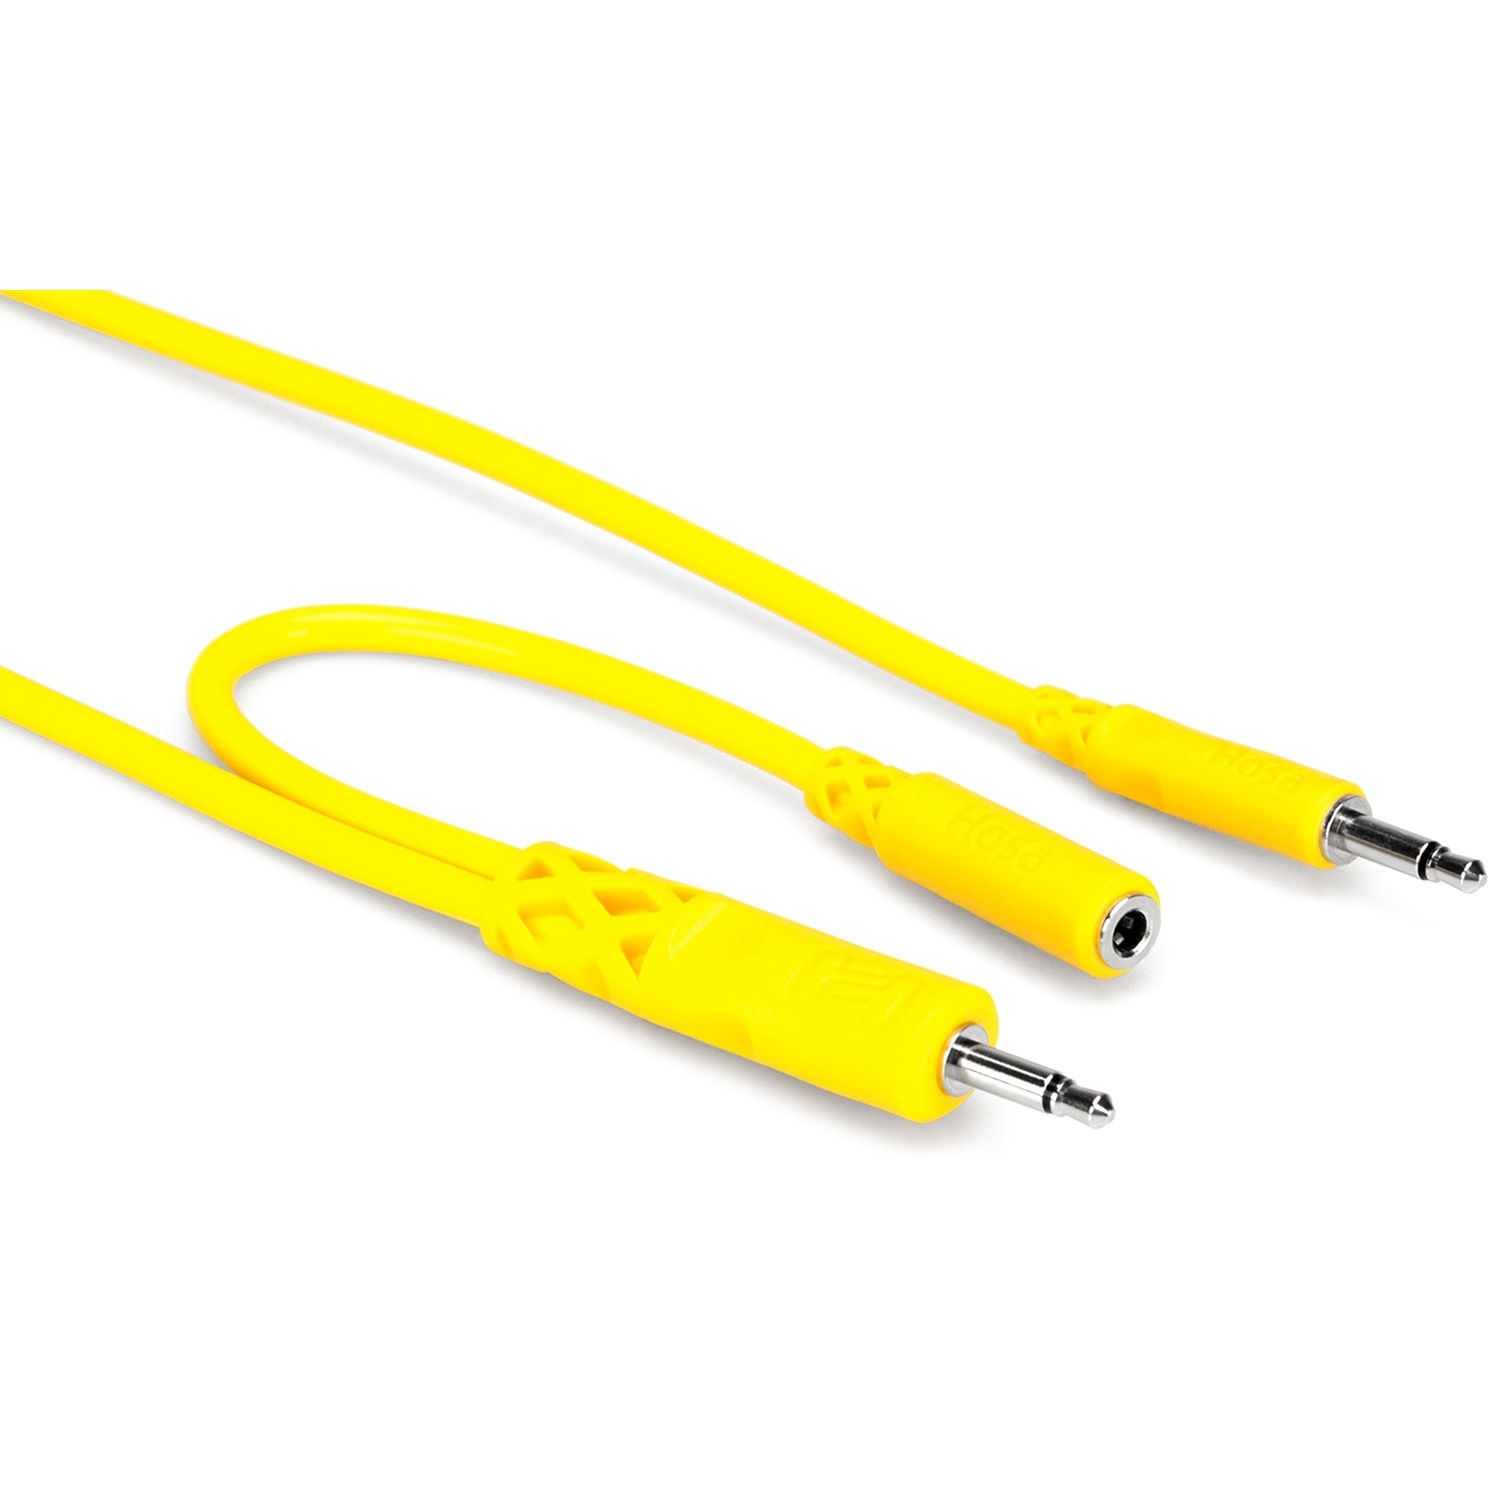 Hosa Technology Hopscotch Patch Cables  Pack of 5 (45cm)